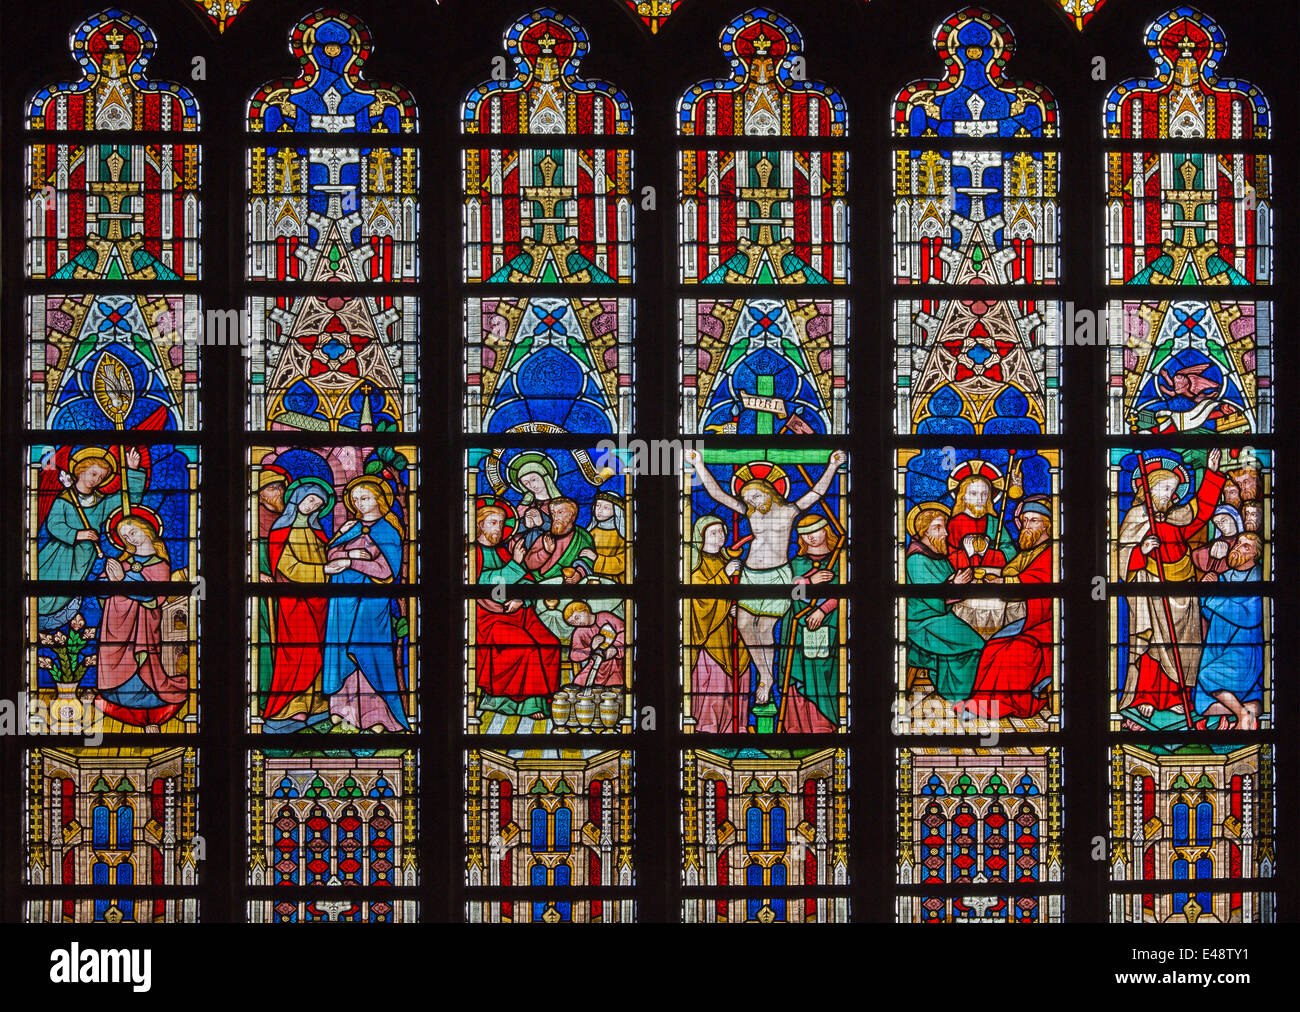 BRUGES, BELGIUM - JUNE 12, 2014: The New Testament scenes on windowpane in St. Salvator's Cathedral (Salvatorskerk) Stock Photo